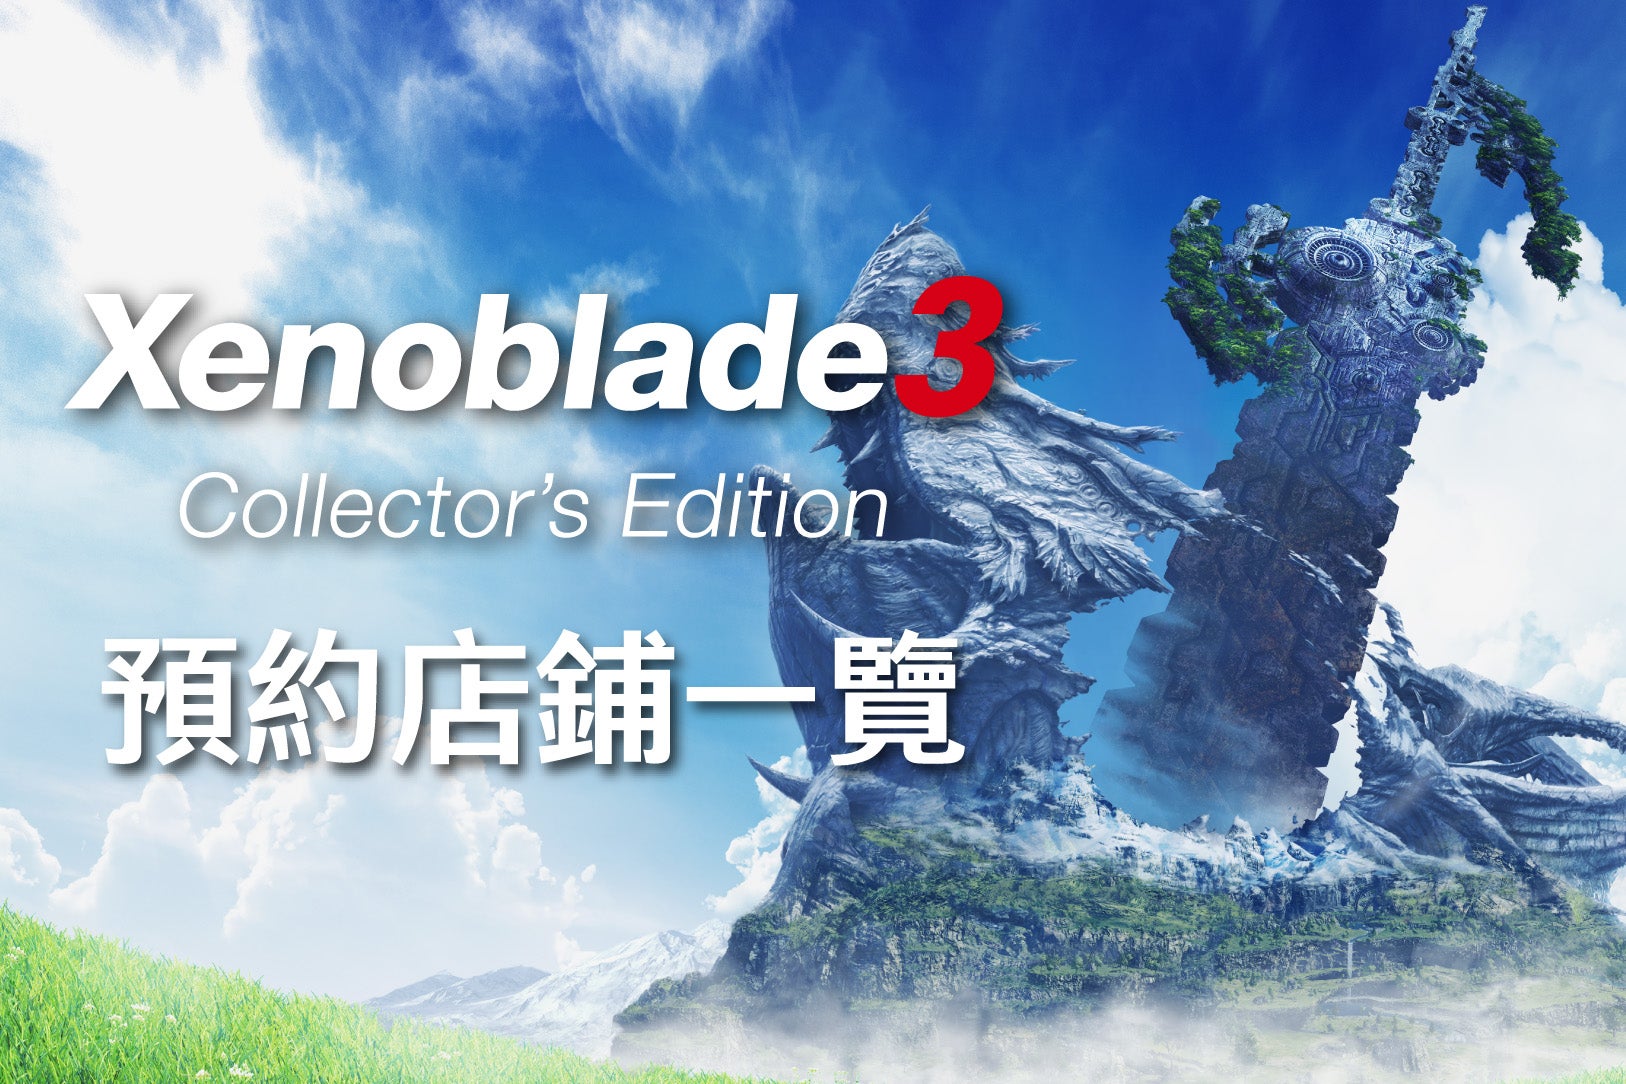 Xenoblade3 Collector’s Edition (日文版) 預約店舖一覽 | Nintendo Switch | 任天堂香港